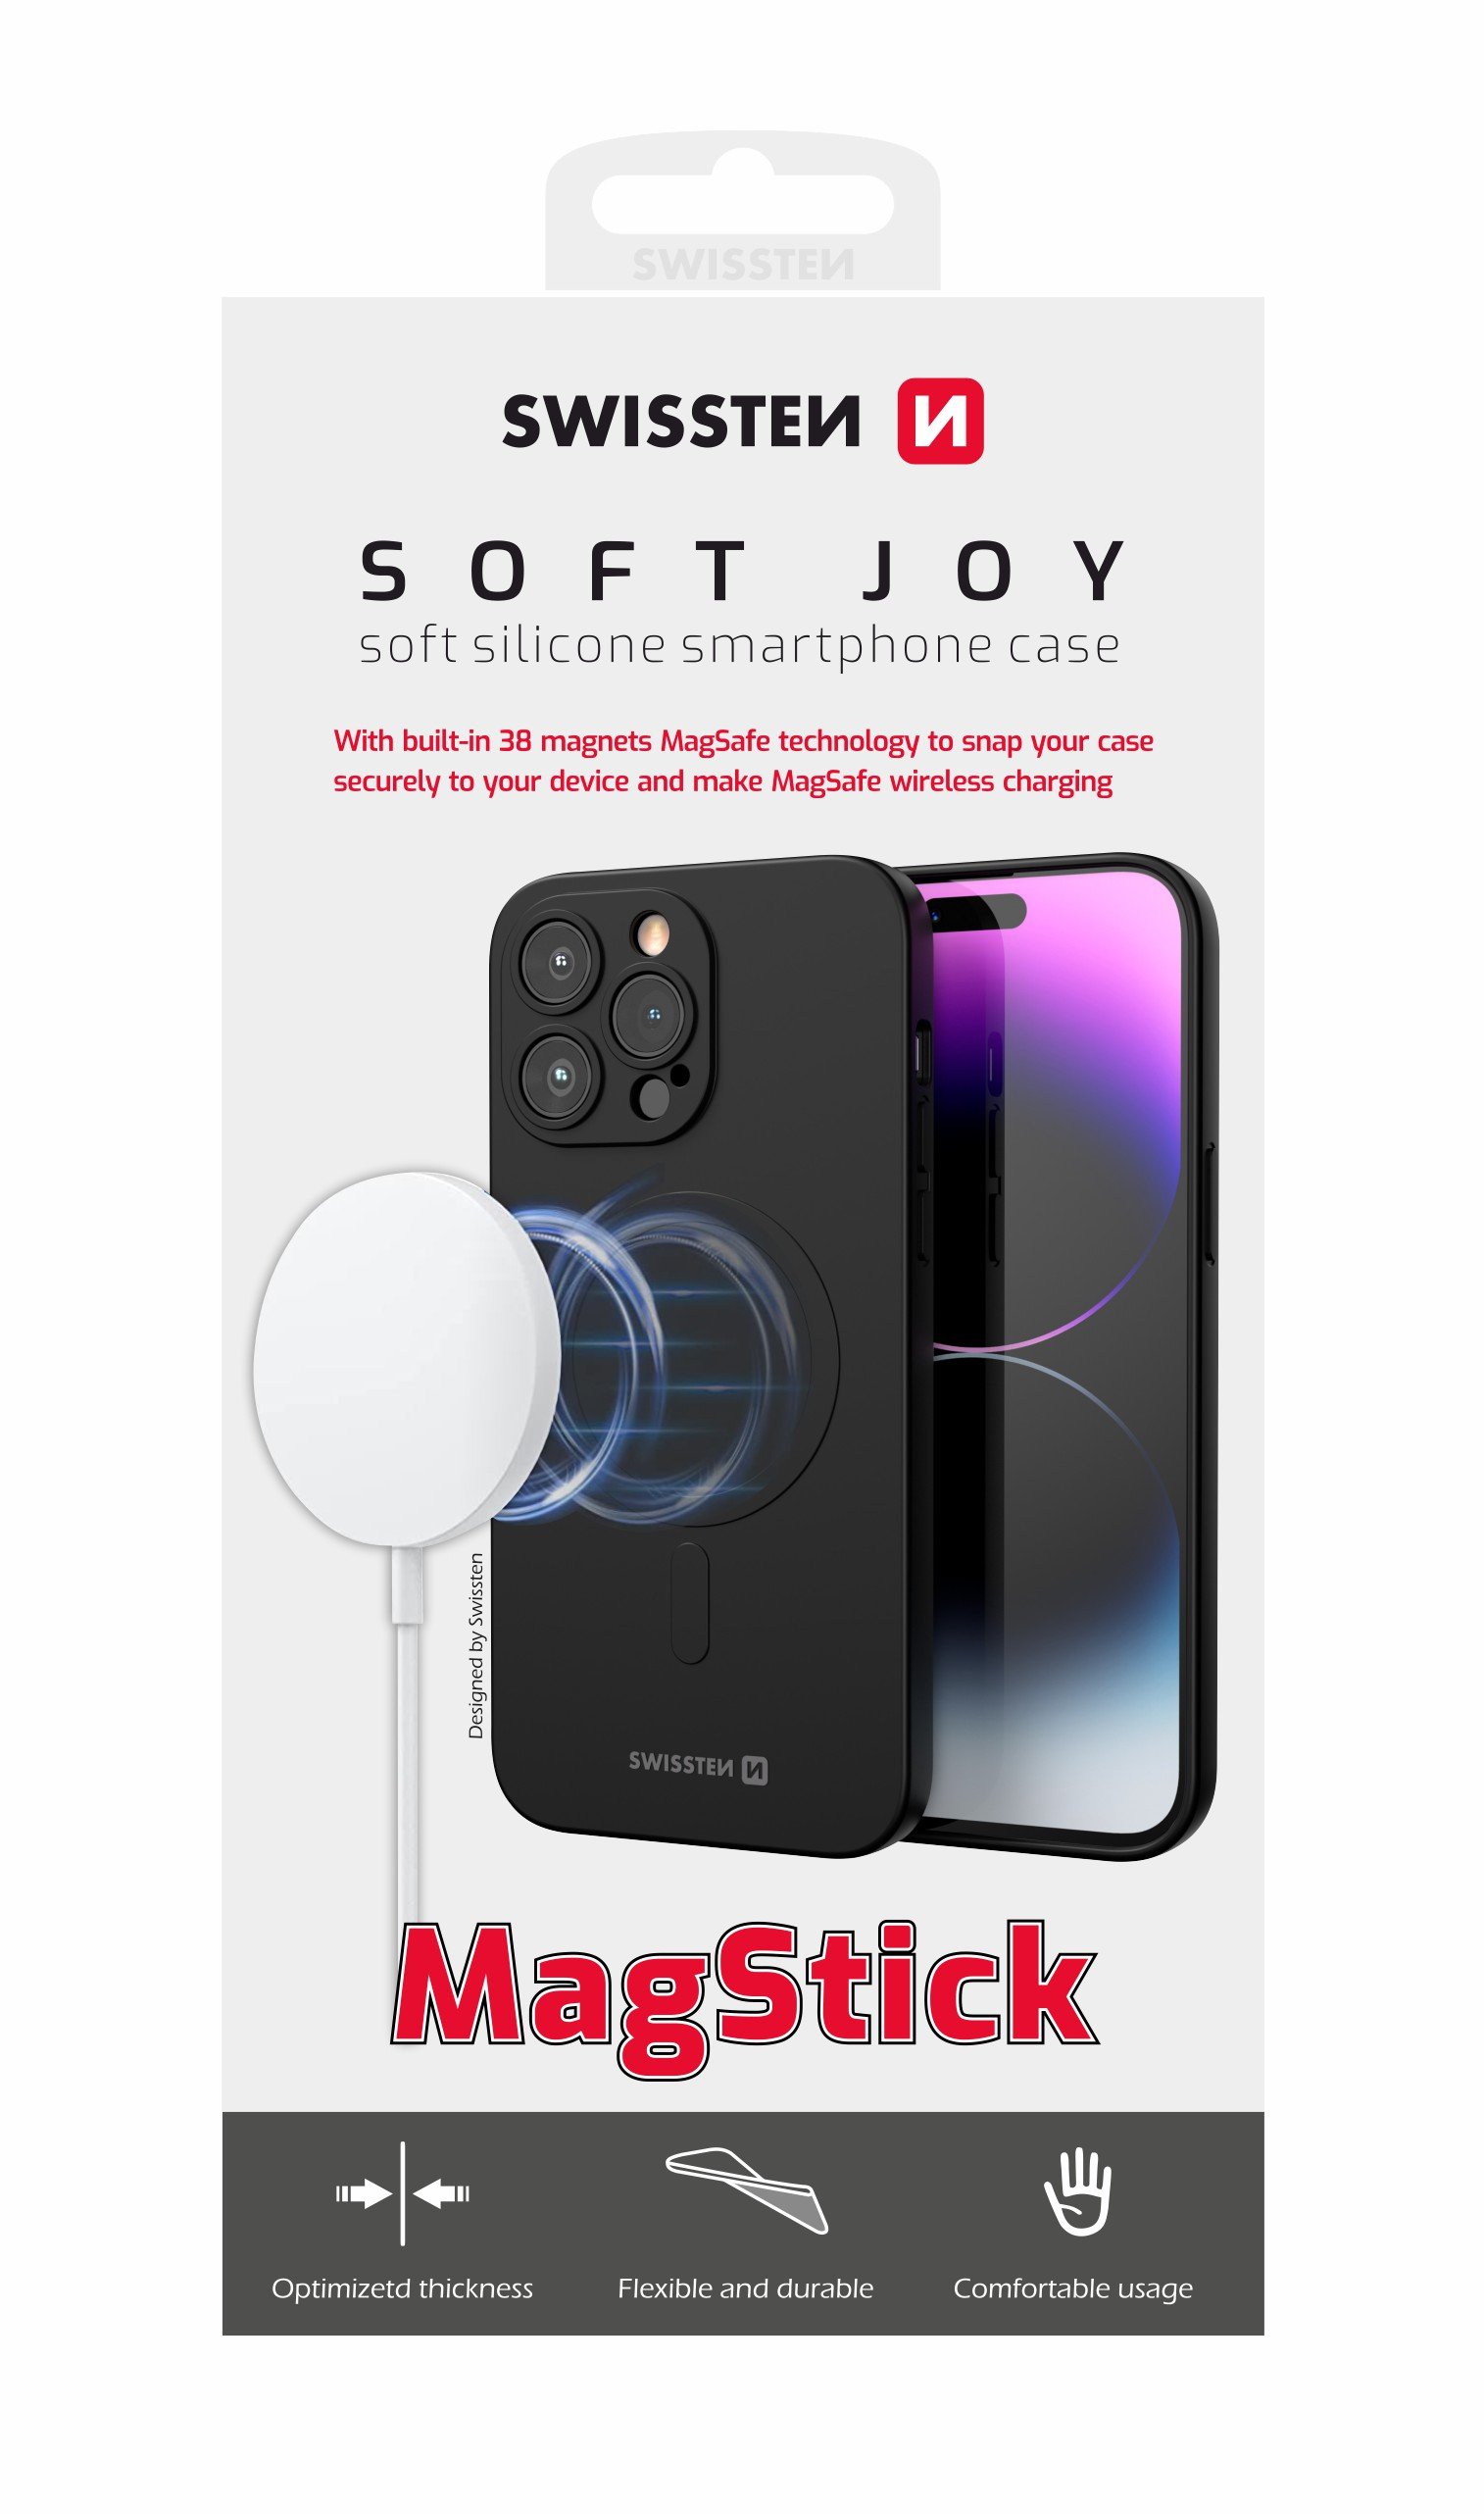 Swissten Soft Joy Magstick Case for Apple iPhone 12 Pro Max